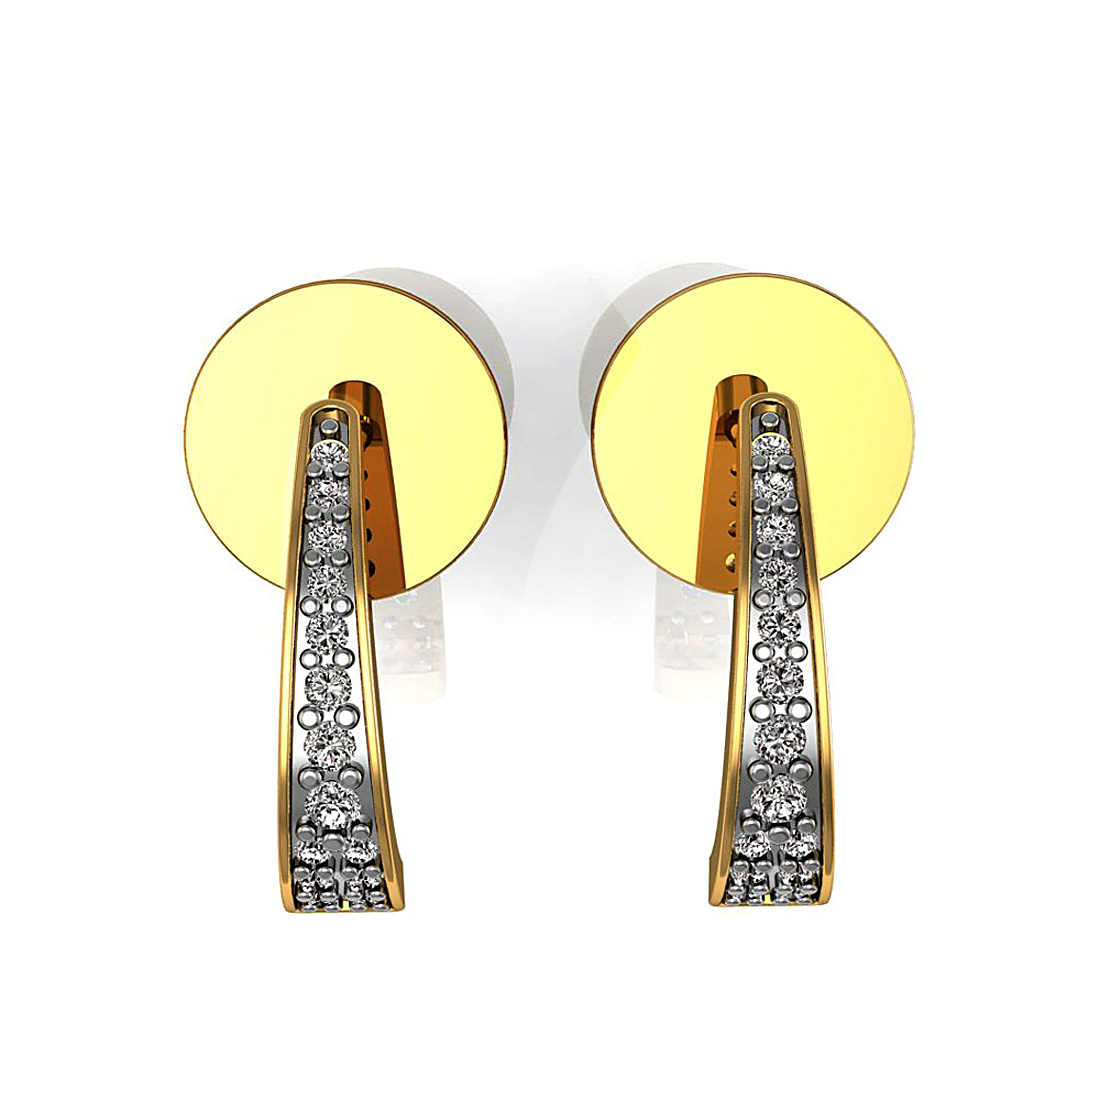 18k solid gold stud earrings with genuine diamond